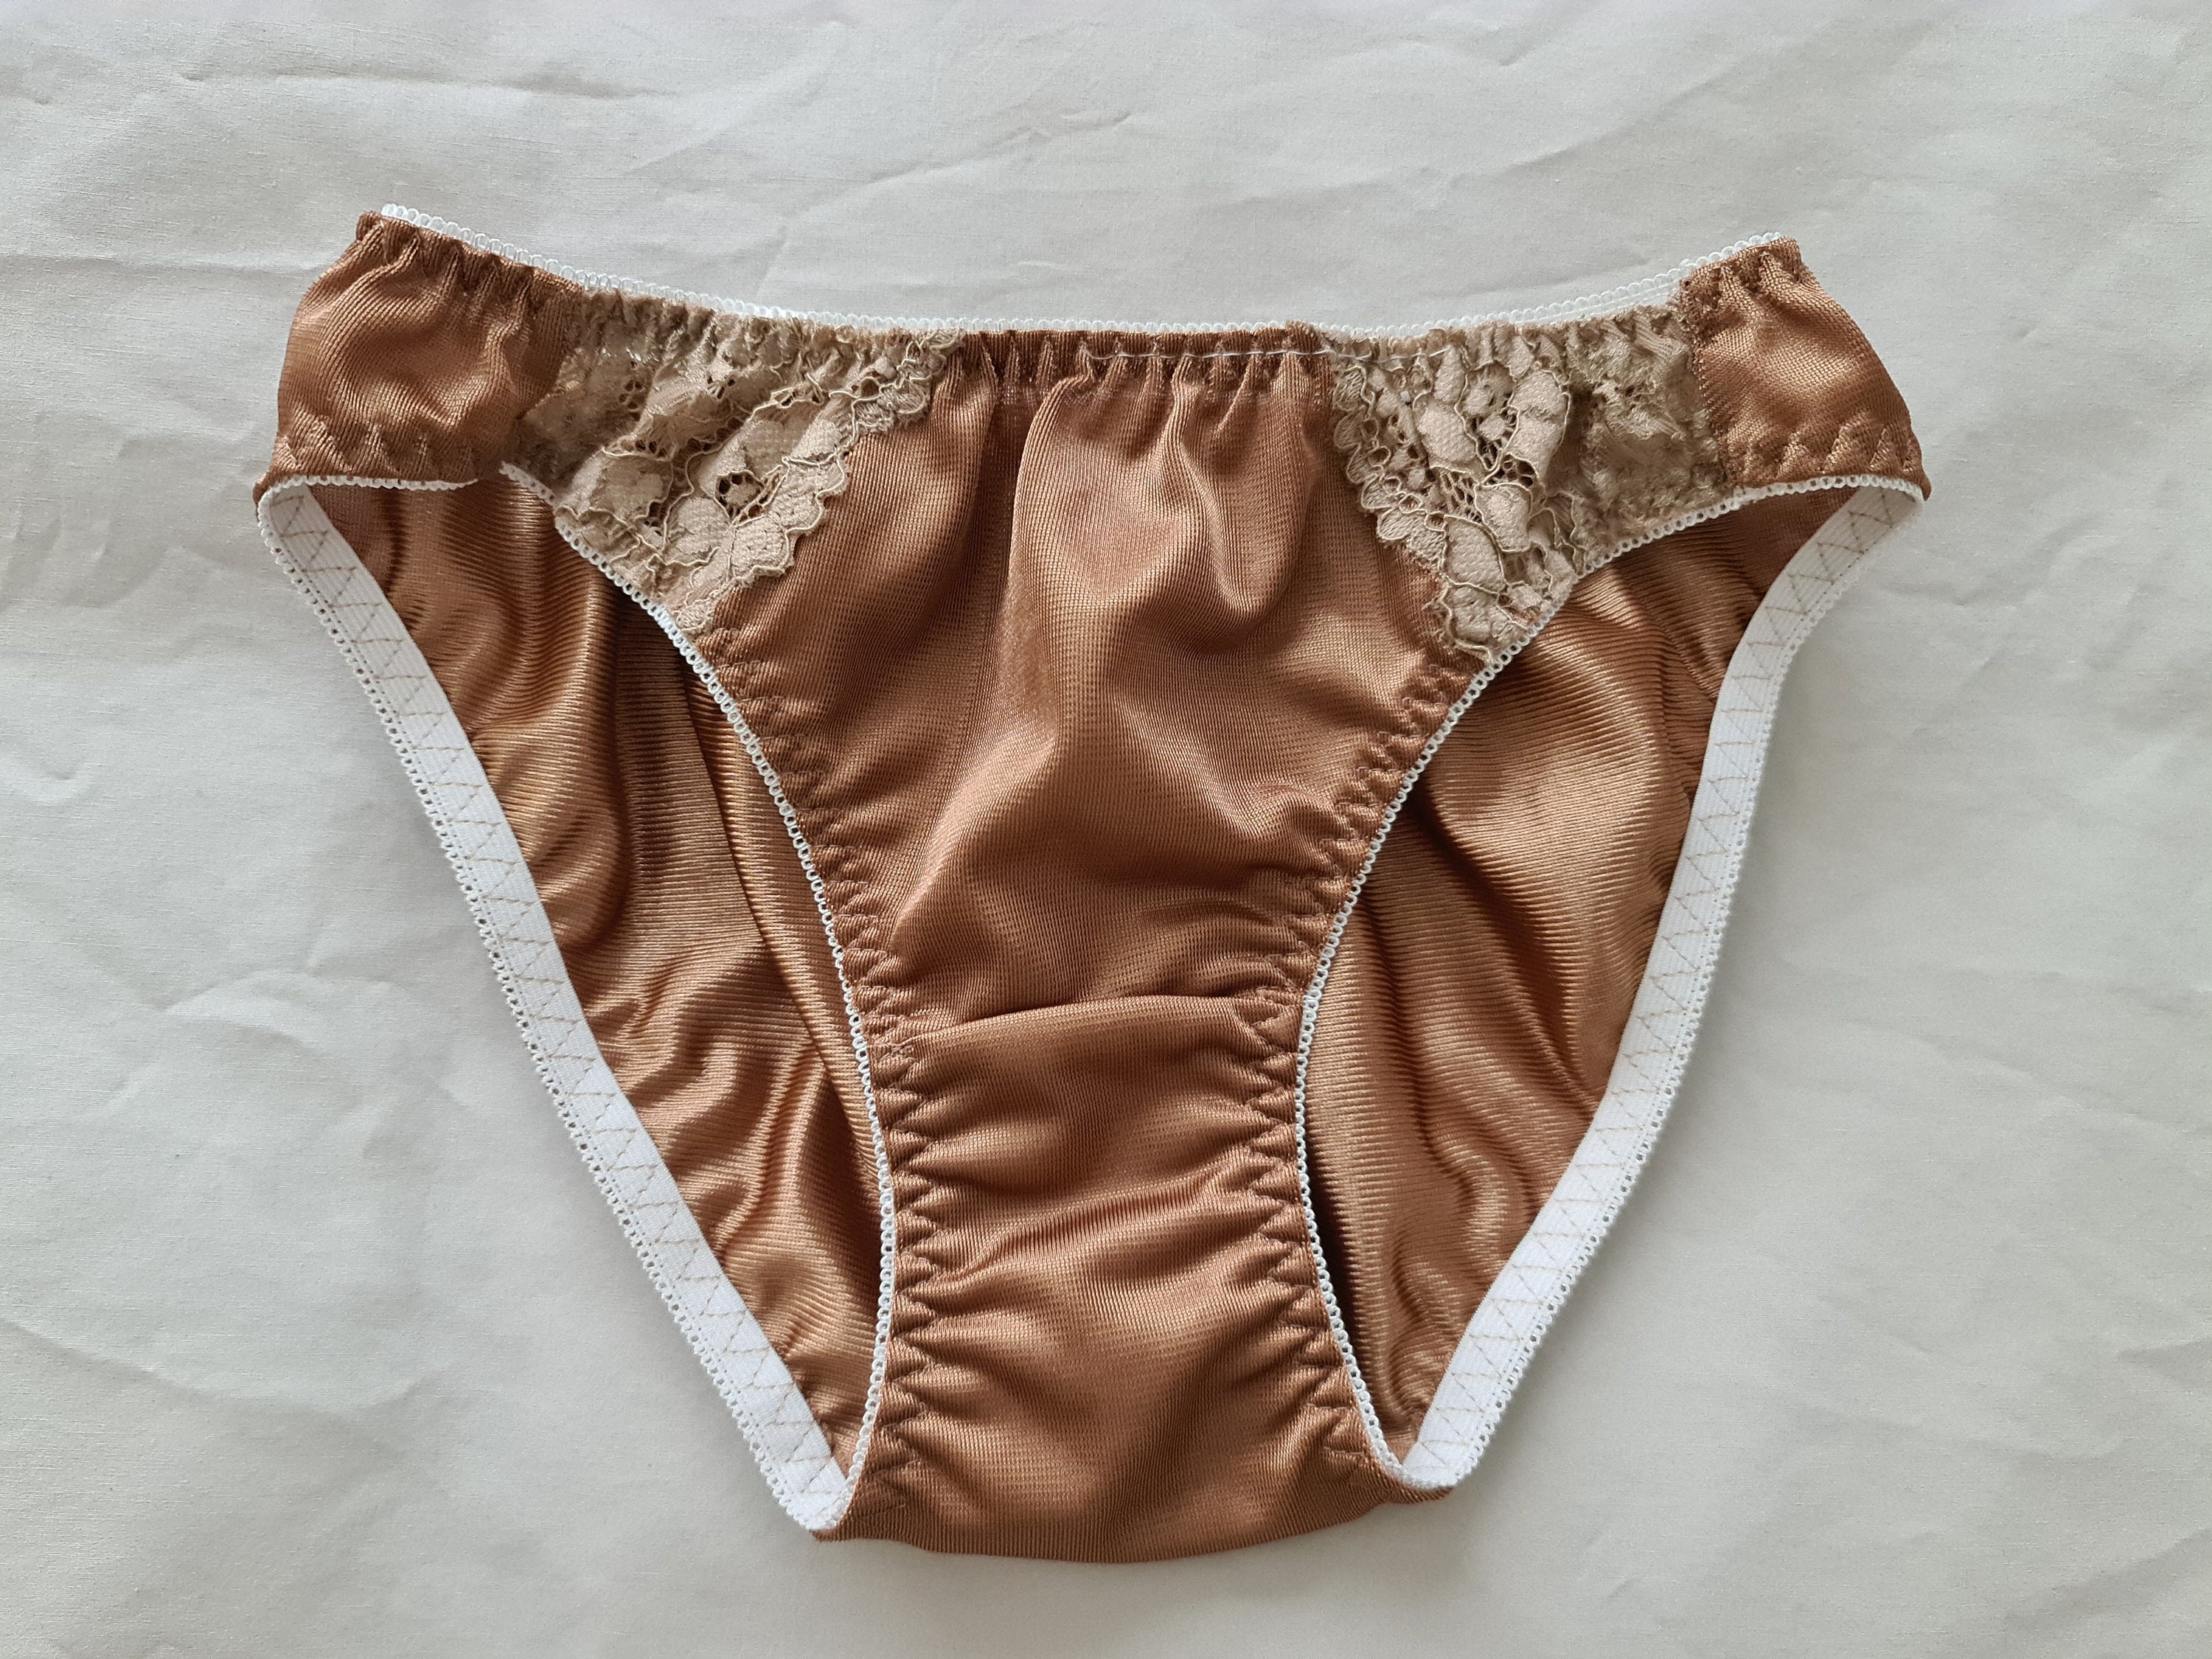 XS Small Panties - 1970s Football Theme Bikini Panty - Player 45